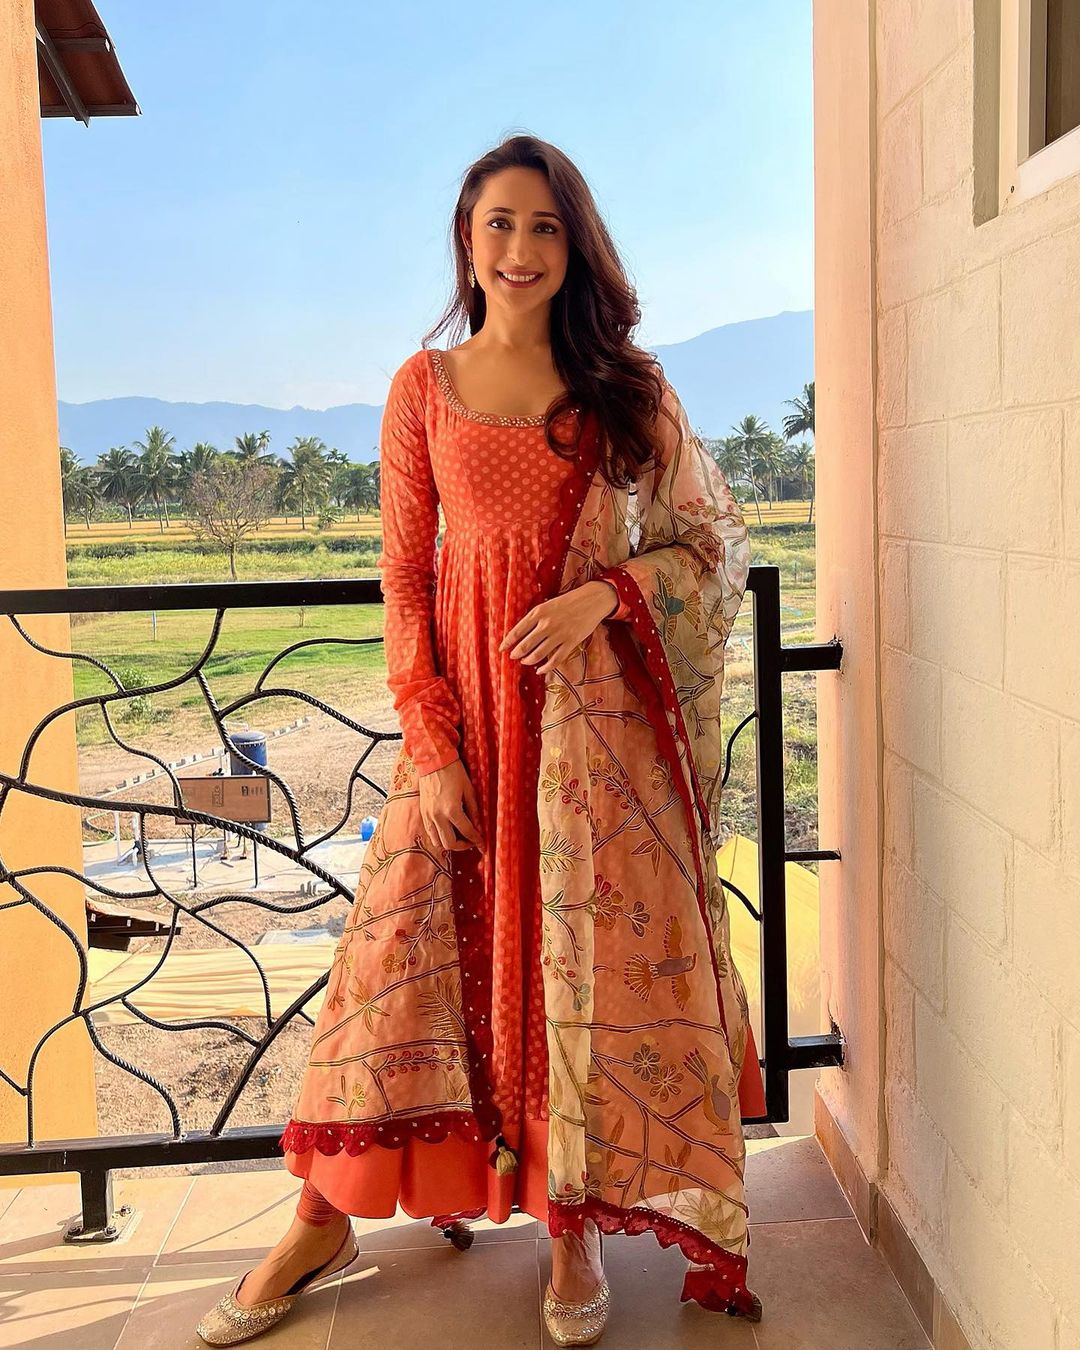 Pragya Jaiswal looks beautiful in the cotton anarkali